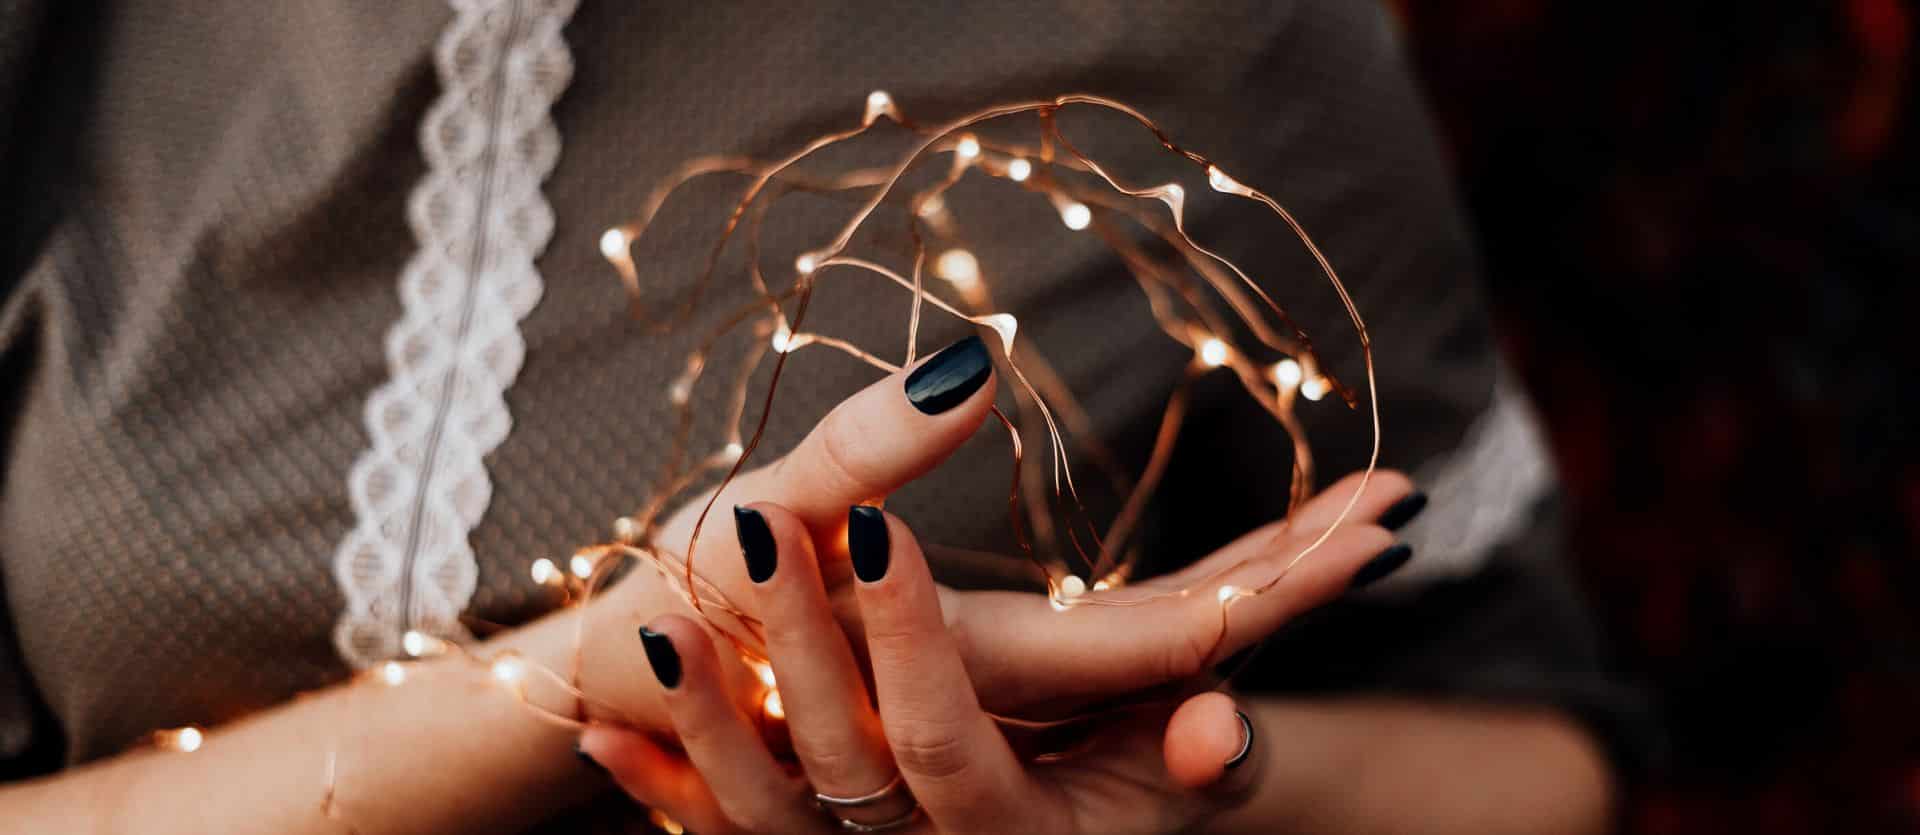 Holding string lights